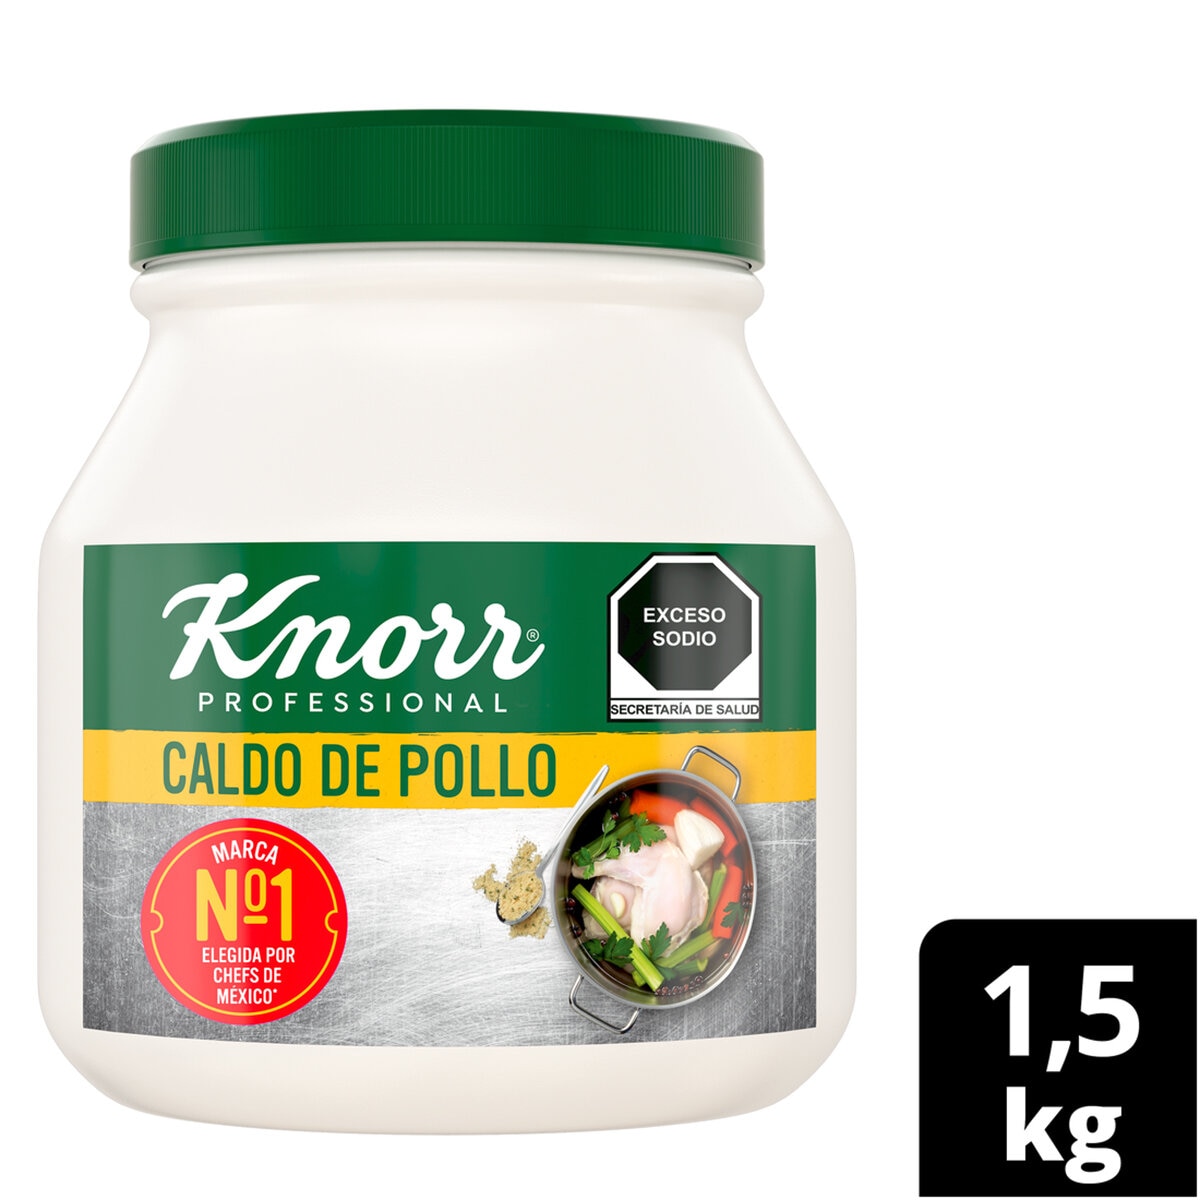 Knorr Professional Caldo de Pollo 1.5 kg